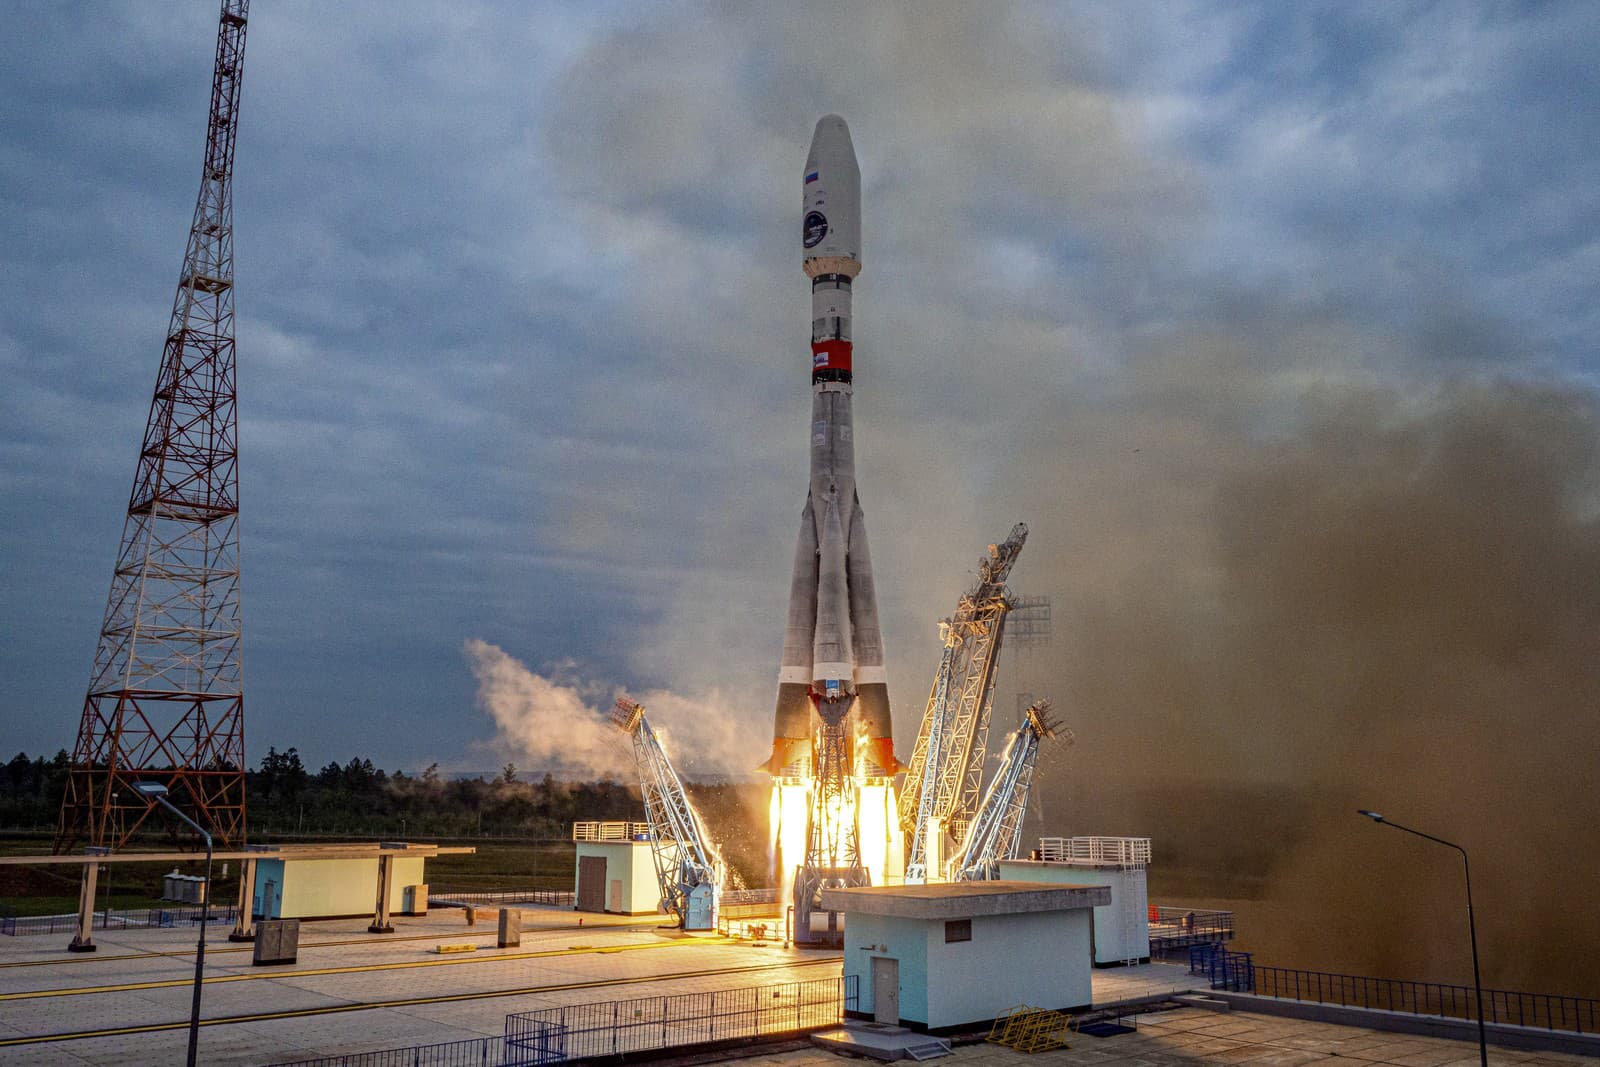 Rusko odštartovalo svoju lunárnu misiu 